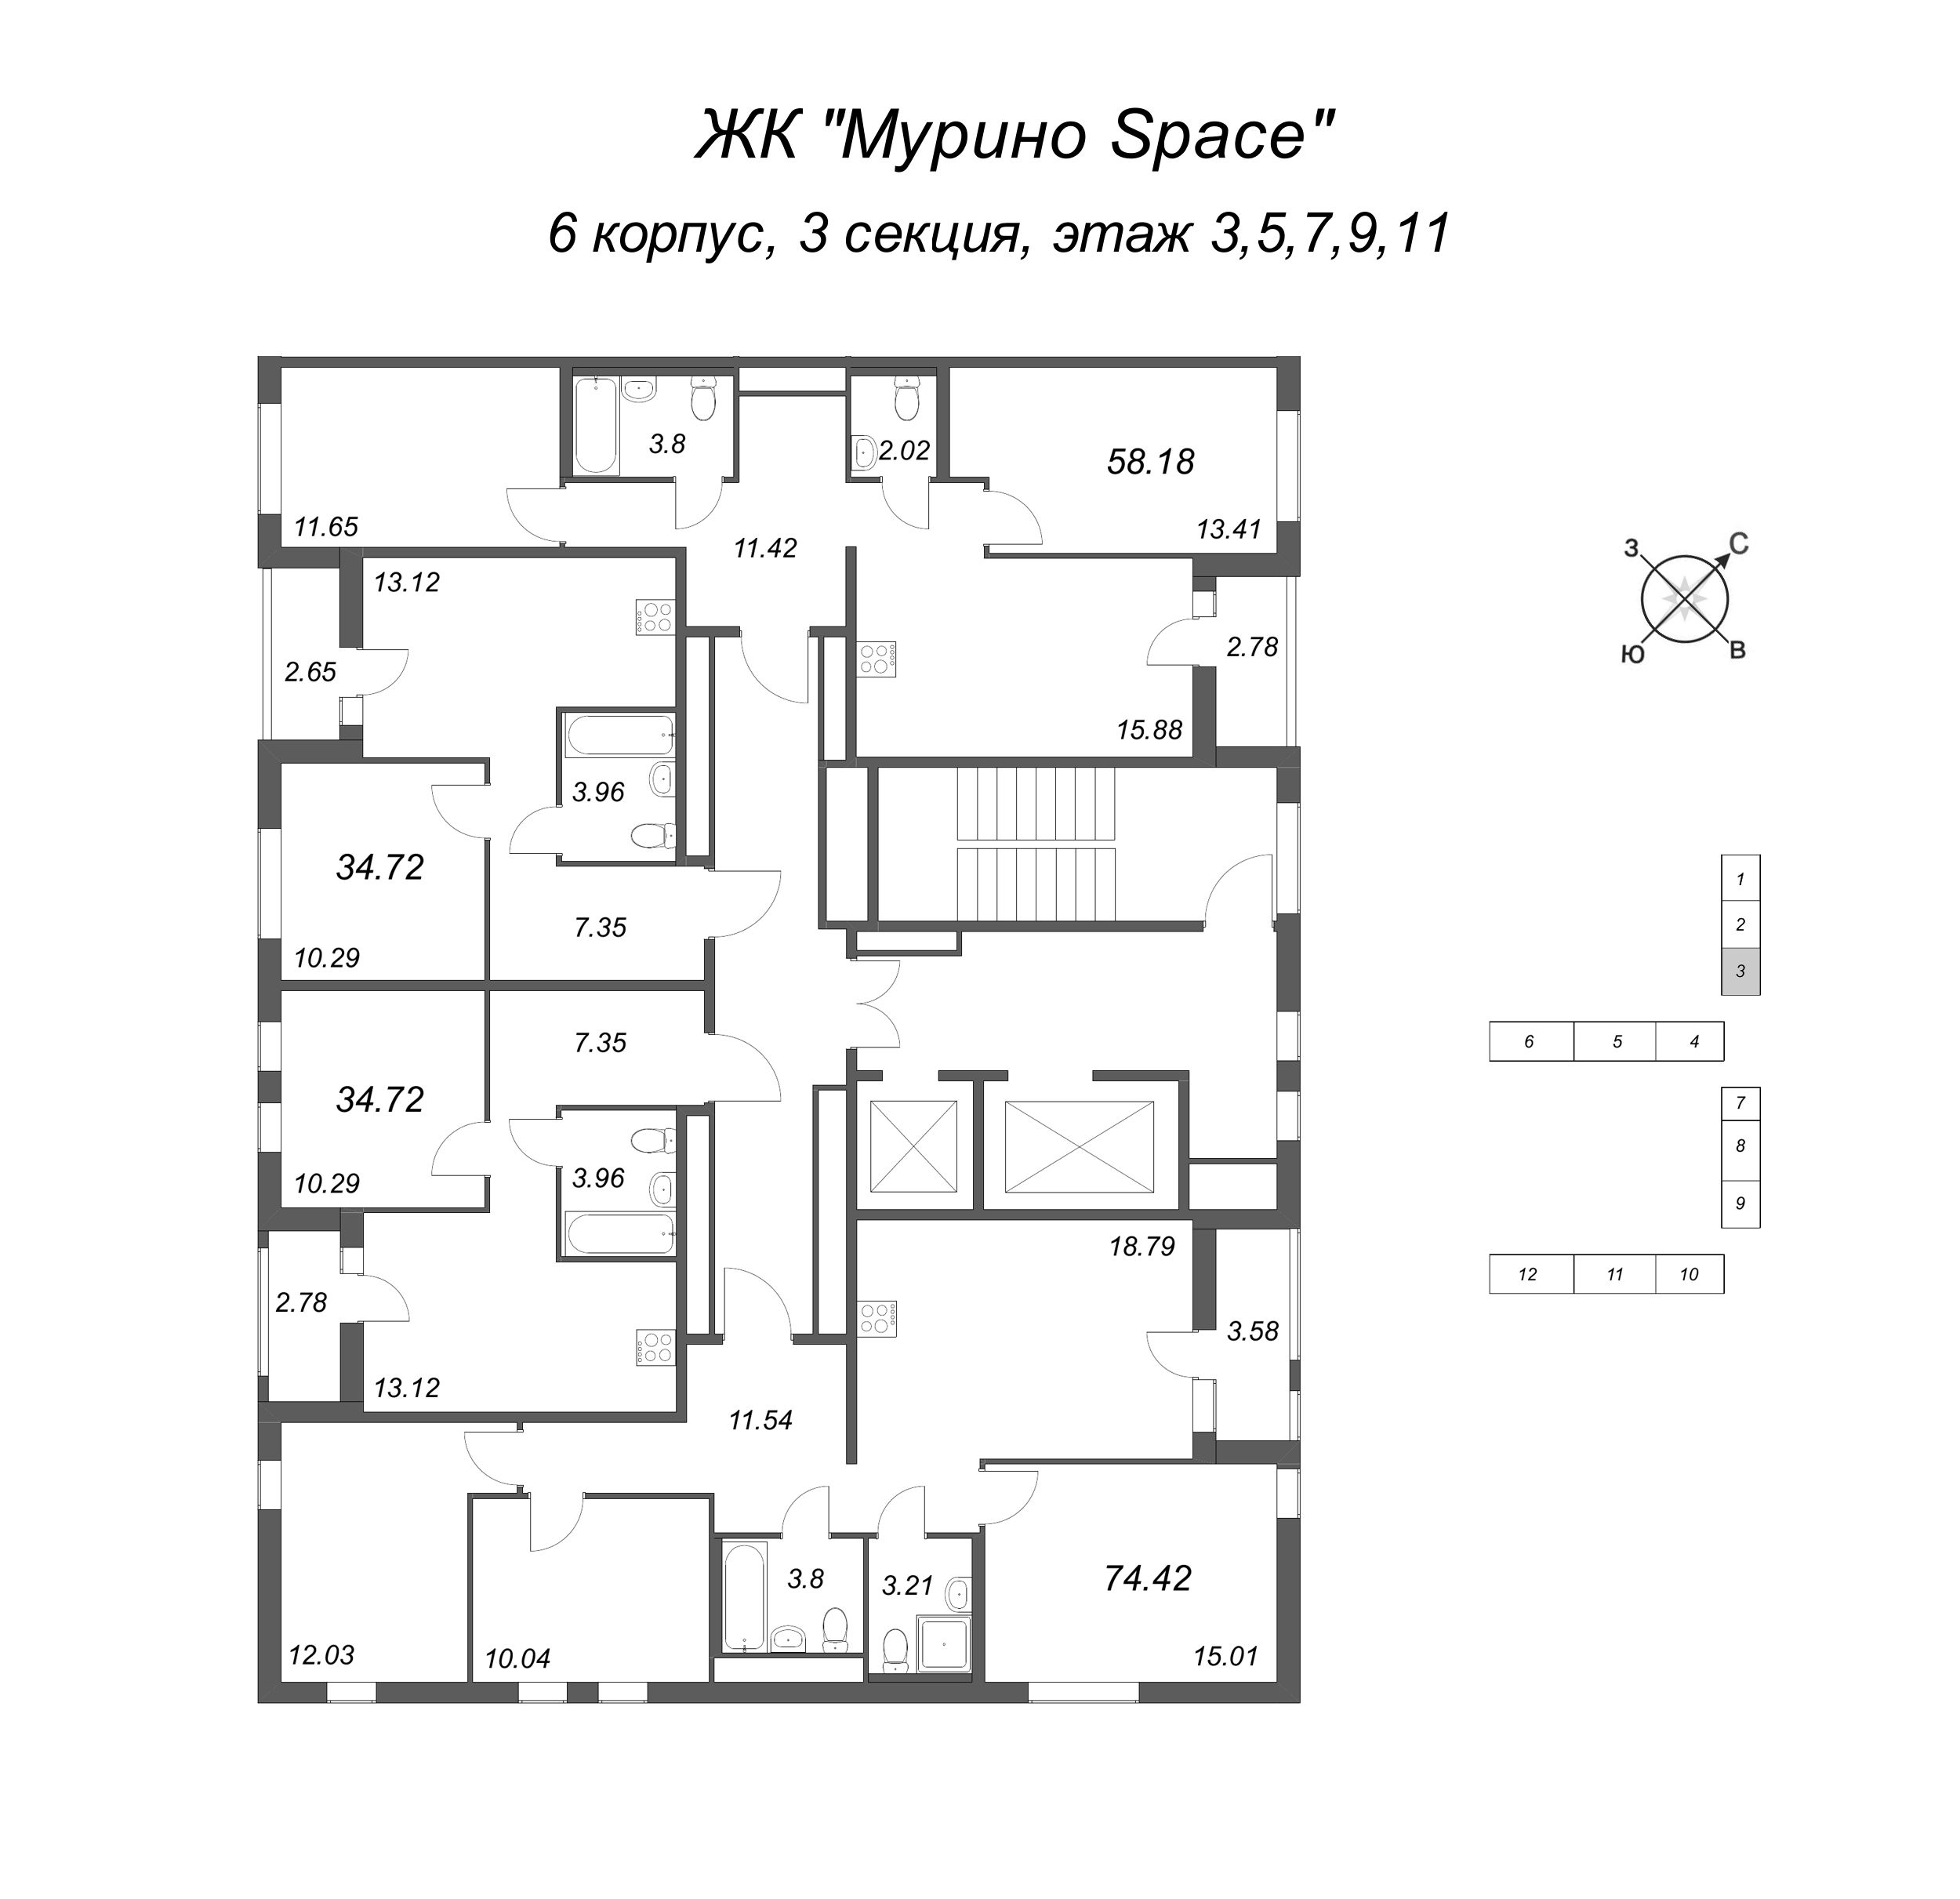 4-комнатная (Евро) квартира, 74.42 м² в ЖК "Мурино Space" - планировка этажа